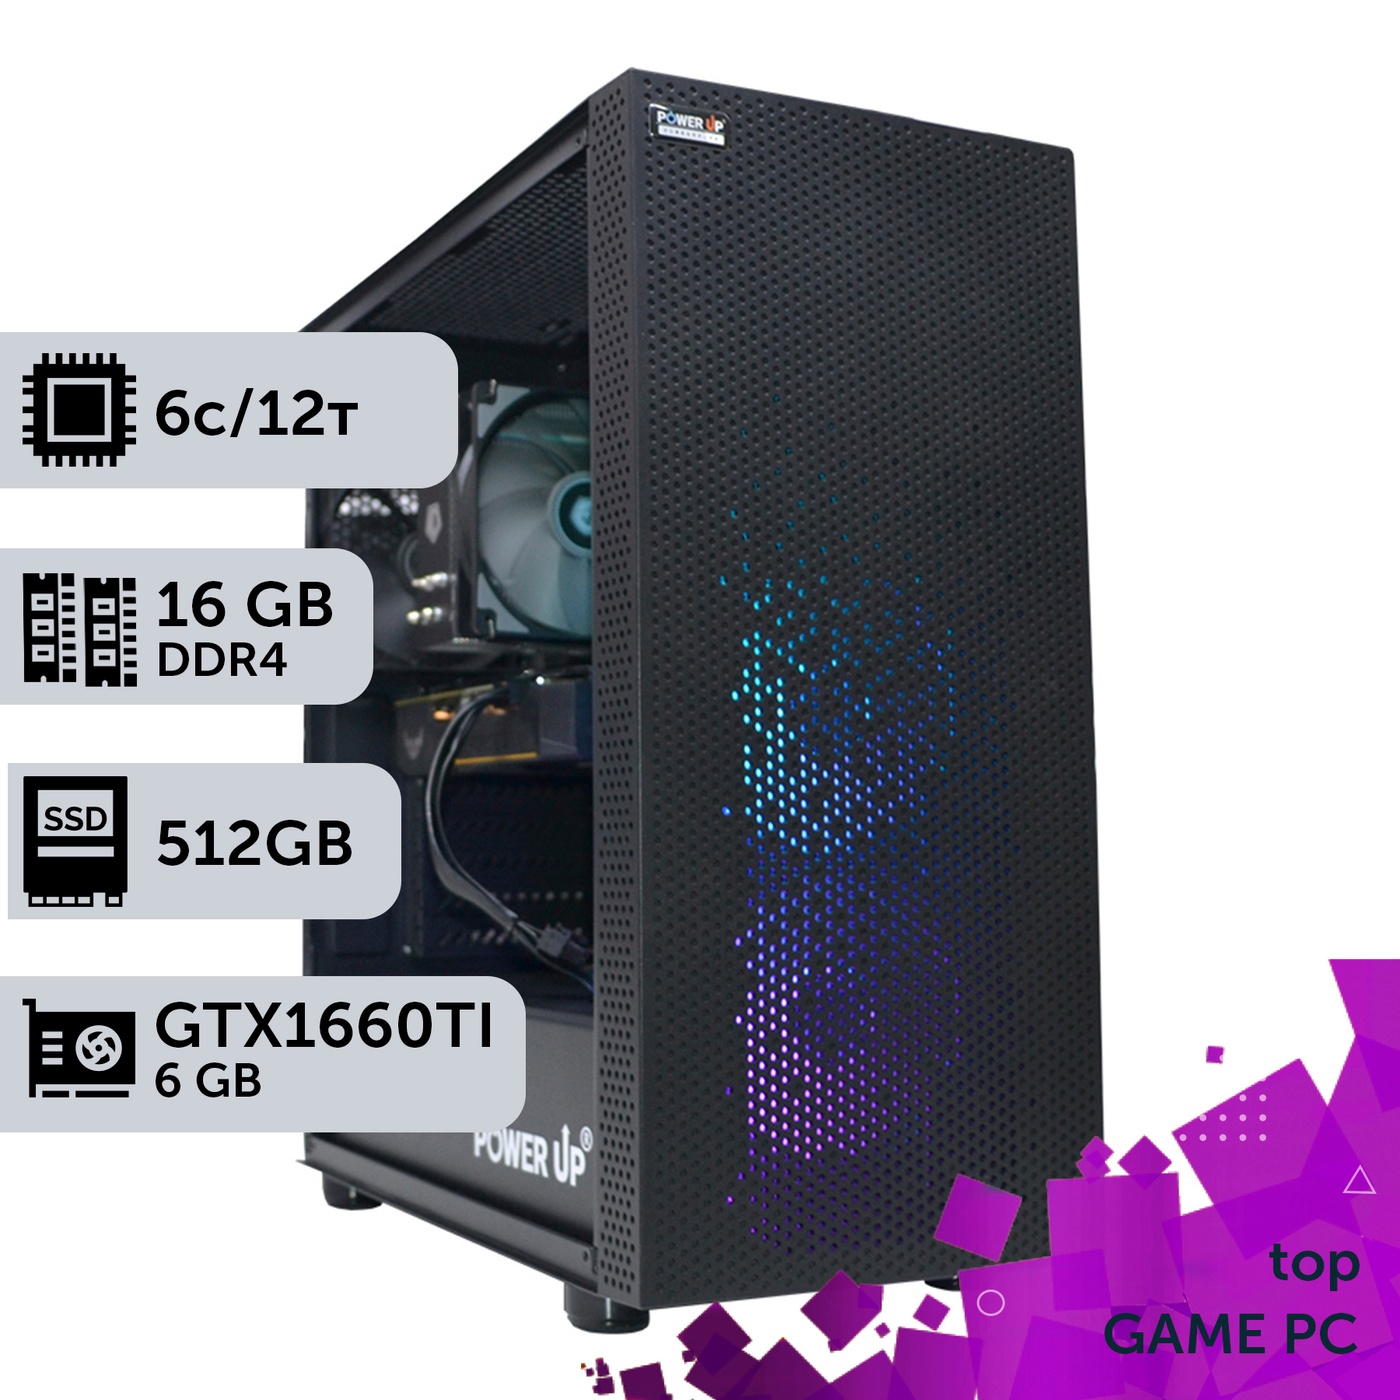 Ігровий комп'ютер GamePC TOP #131 Core i5 10400F/16 GB/SSD 512GB/GeForce GTX 1660Ti 6GB